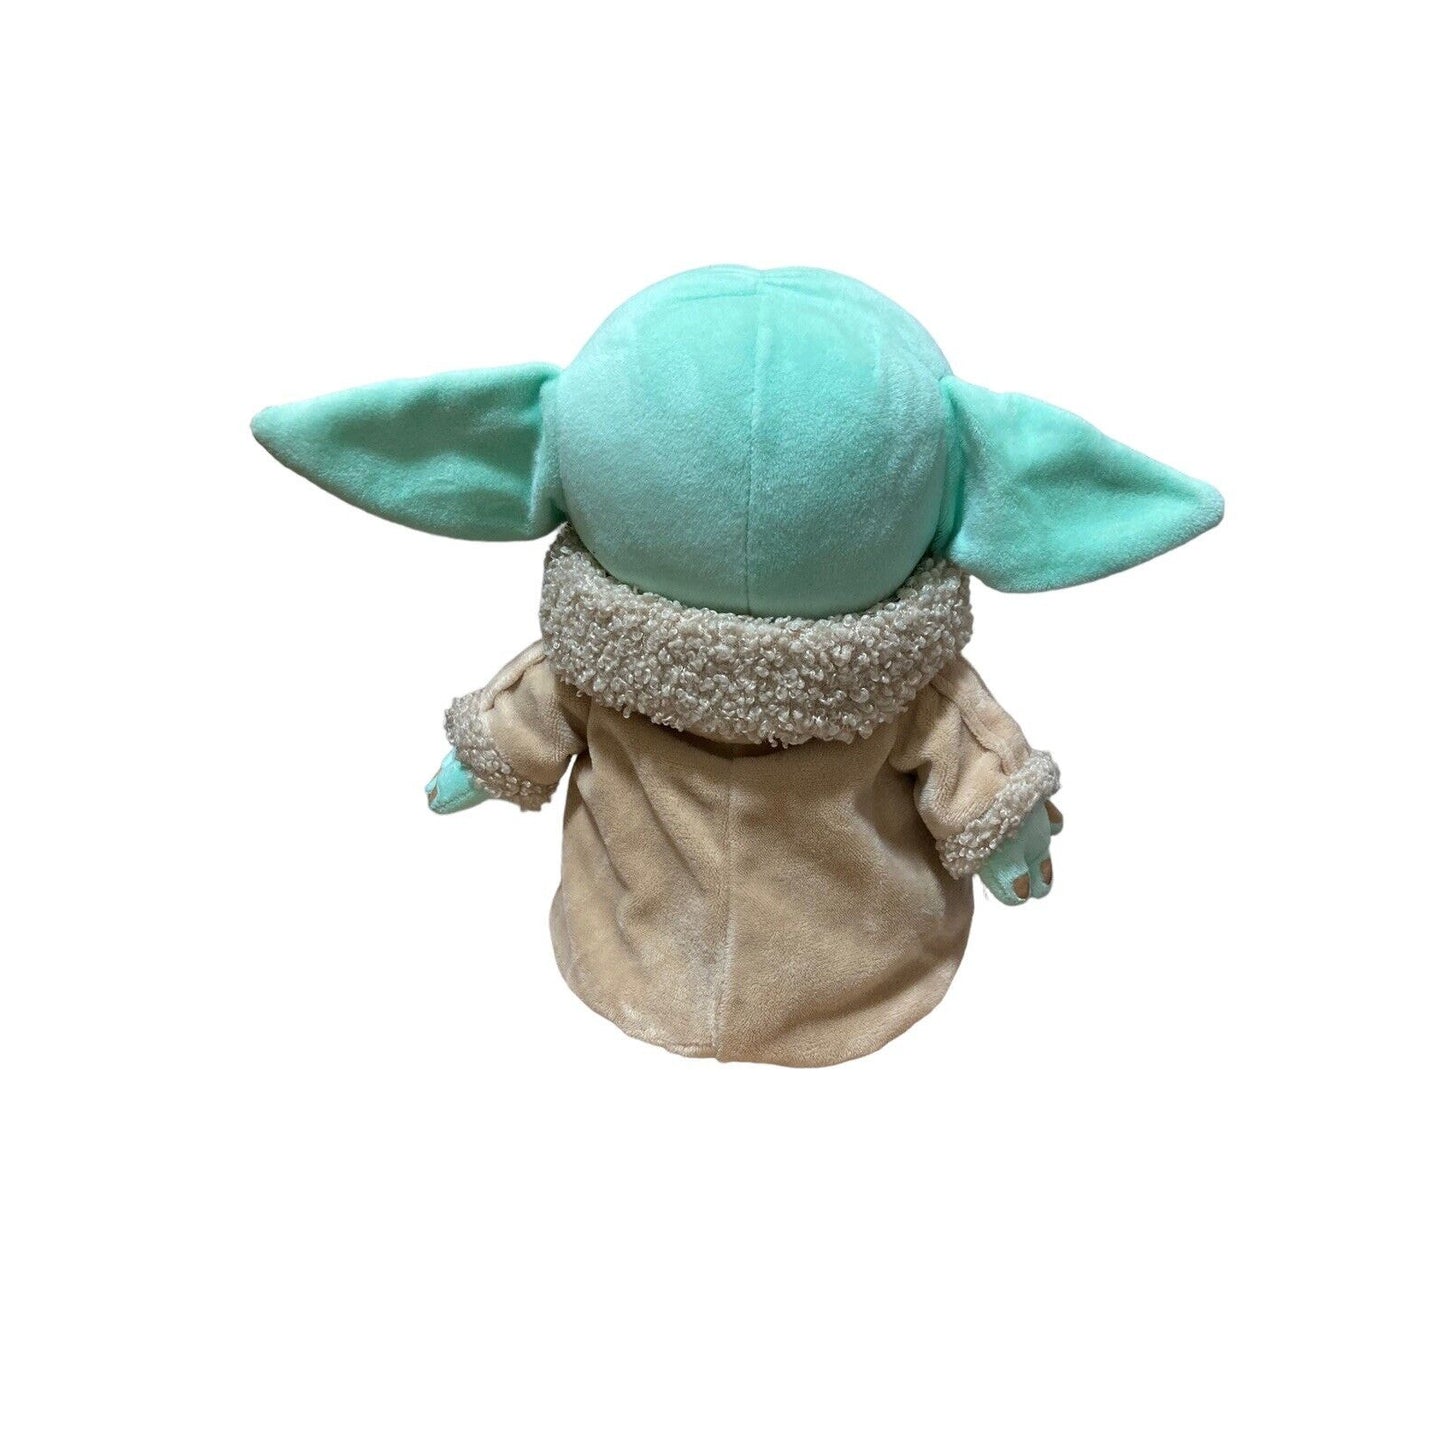 Star Wars Mattel Mandalorian The Child 9" Baby Yoda Grogu Plush Stuffed Animal